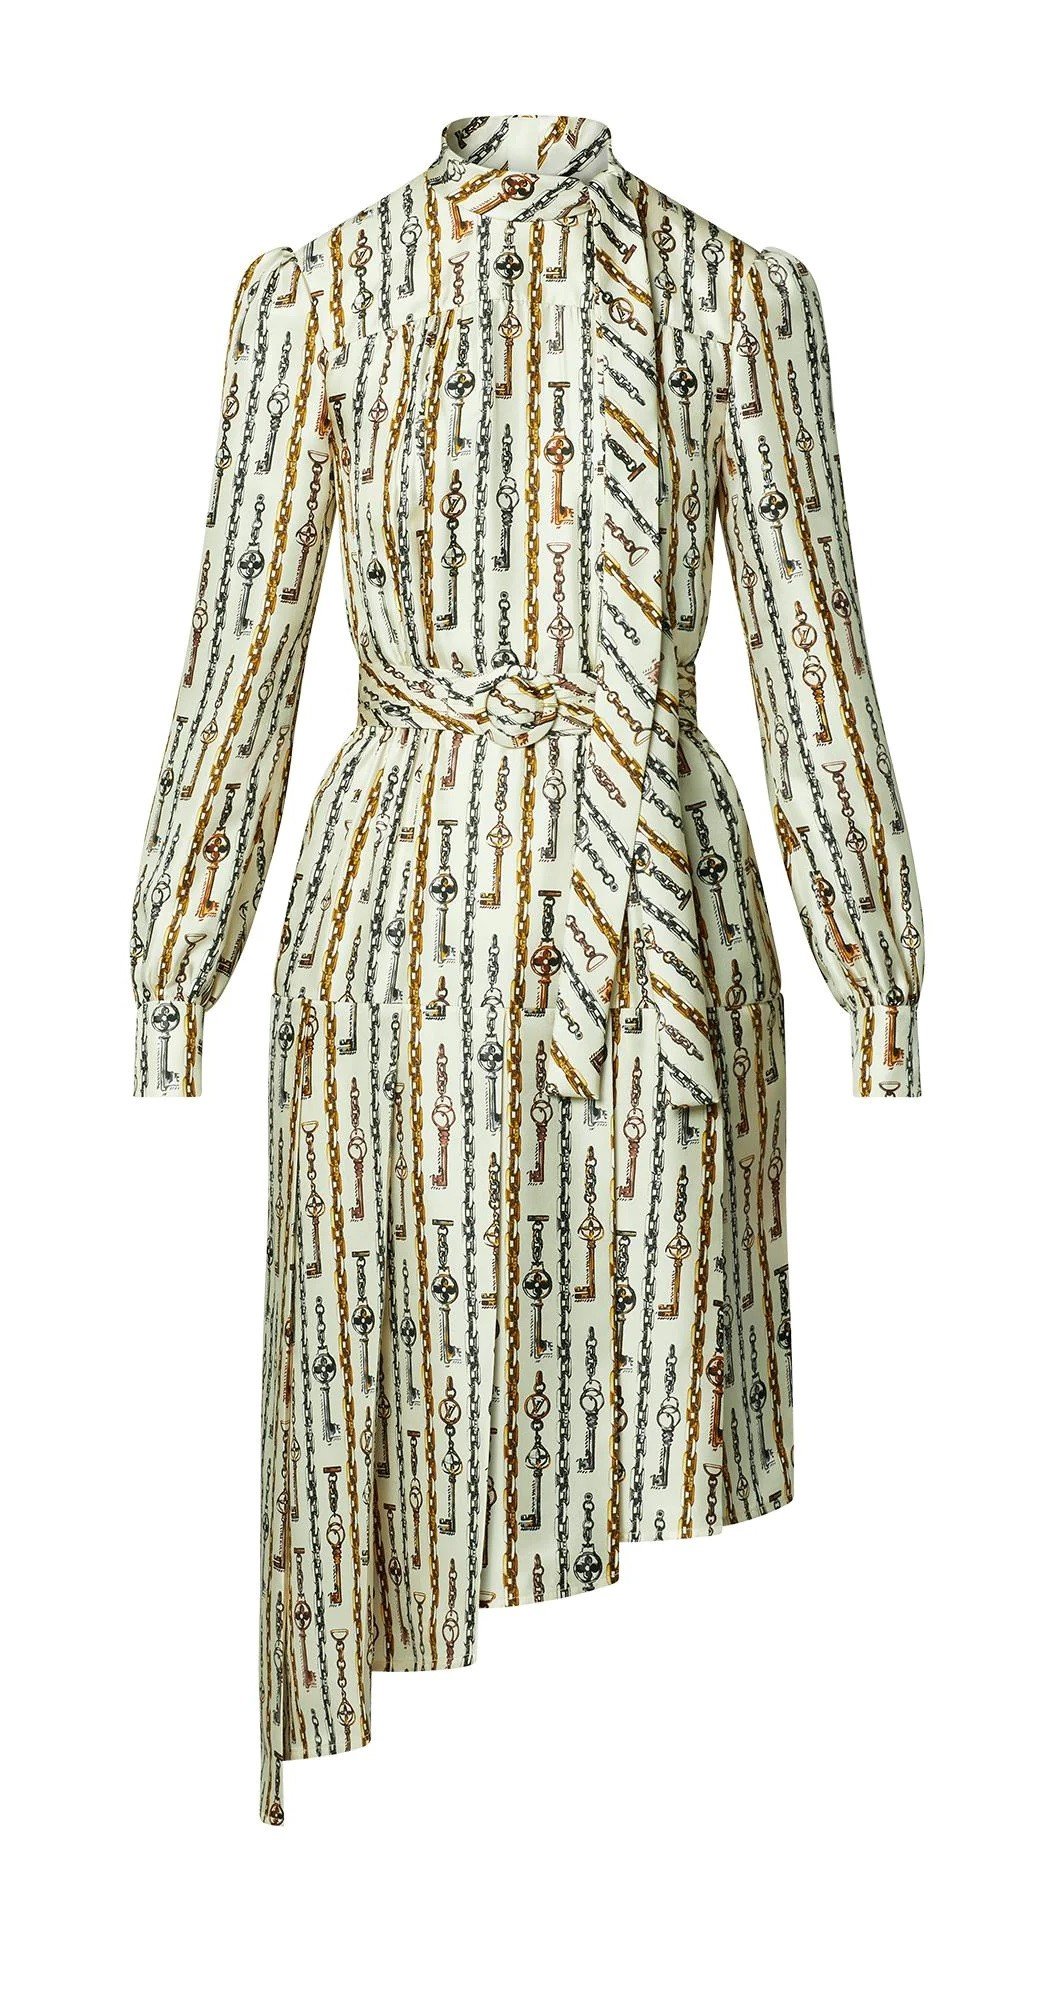 Louis Vuitton Chain Print Asymmetrical Long-Sleeved Dress.jpg